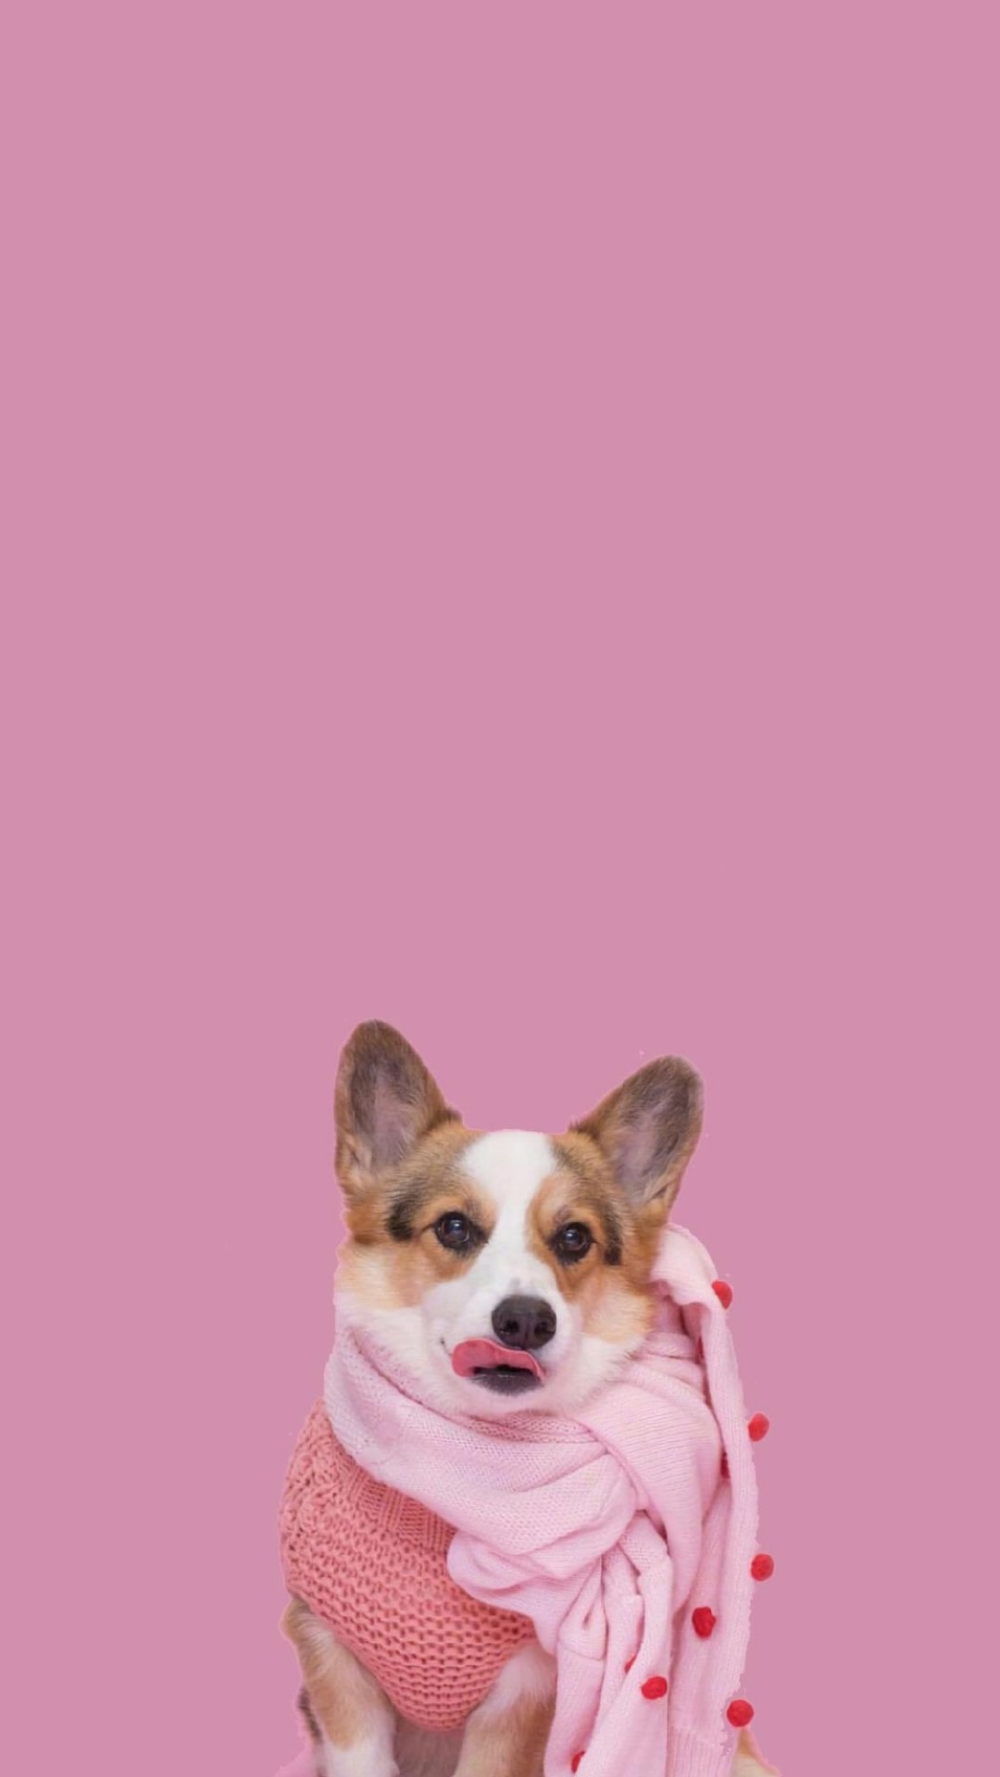 Wallpaper; Mobile Wallpaper; Wallpaper iPhone; Solid Color Wallpaper;Colorful Wallpaper; Landscape Wallpaper;. Cute dog wallpaper, Dog wallpaper, Animal wallpaper